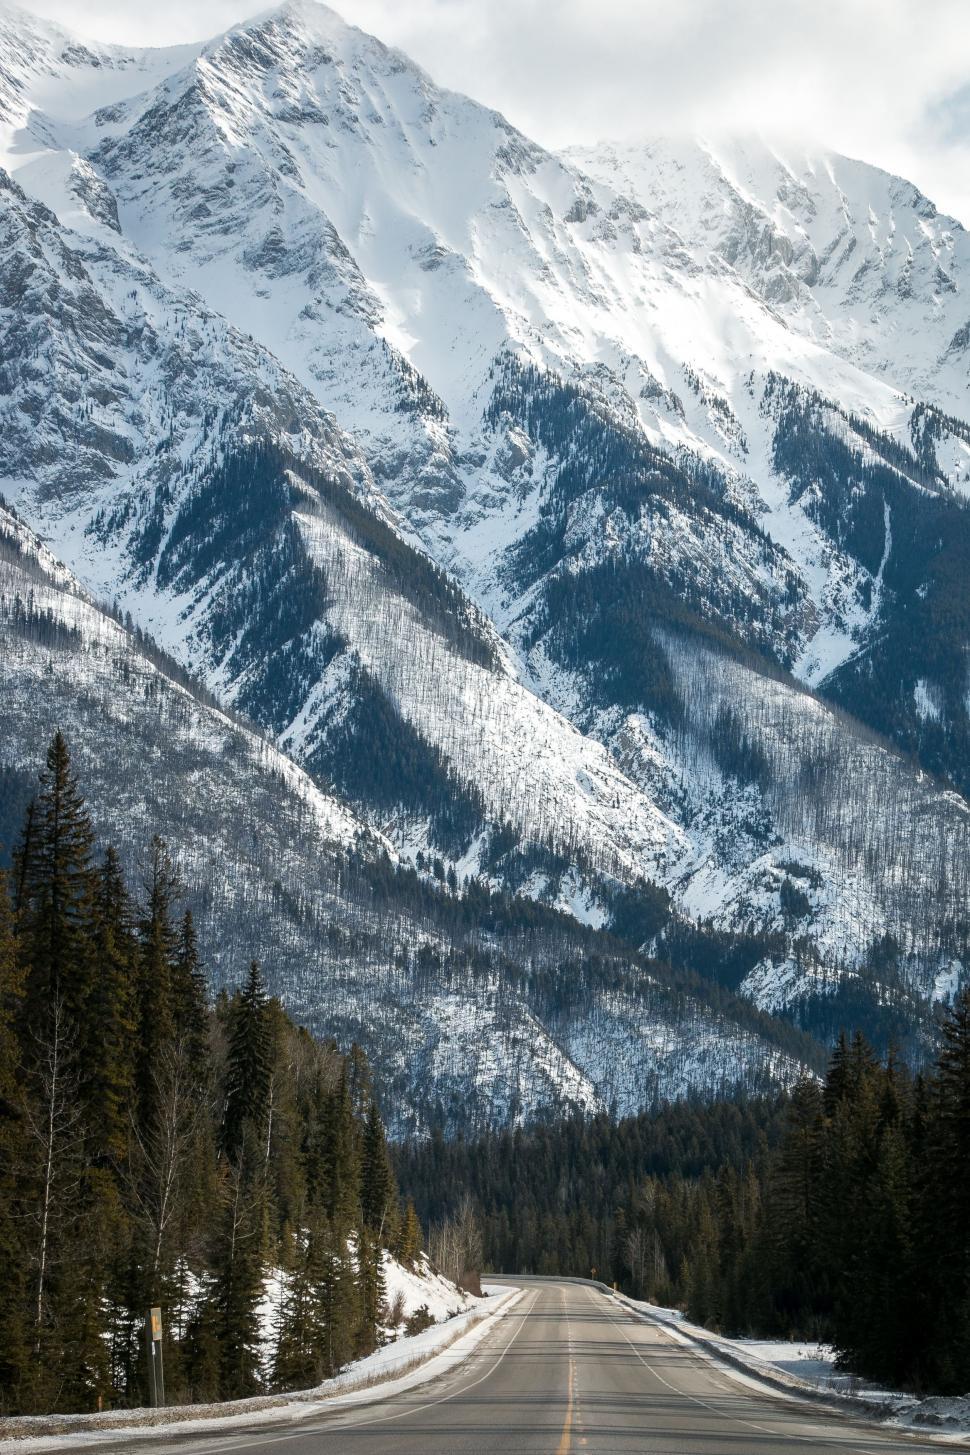 Free Image of Snowy Mountain Range Road 